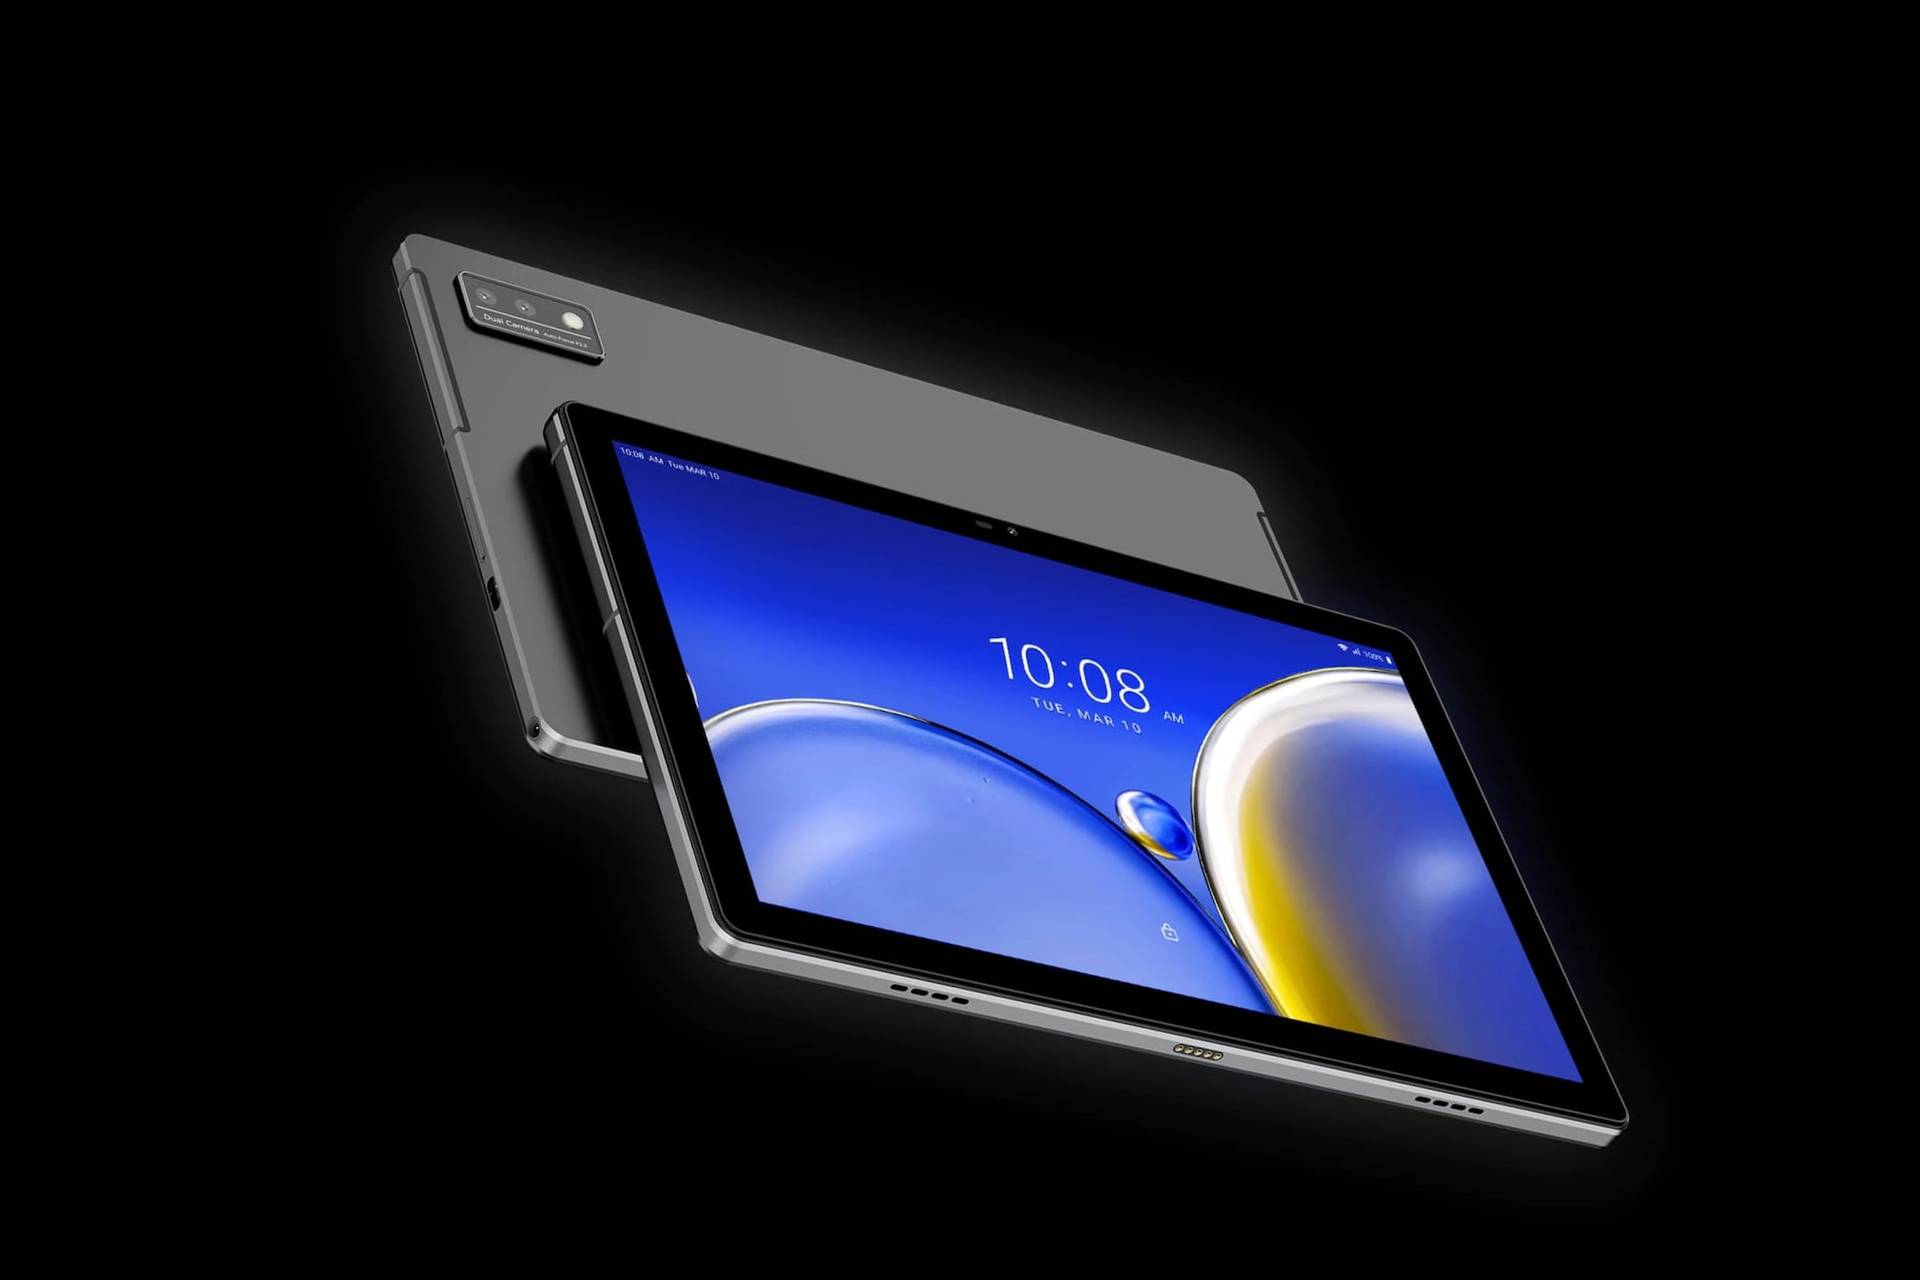 HTC announces lackluster tablet following questionable metaverse phone release